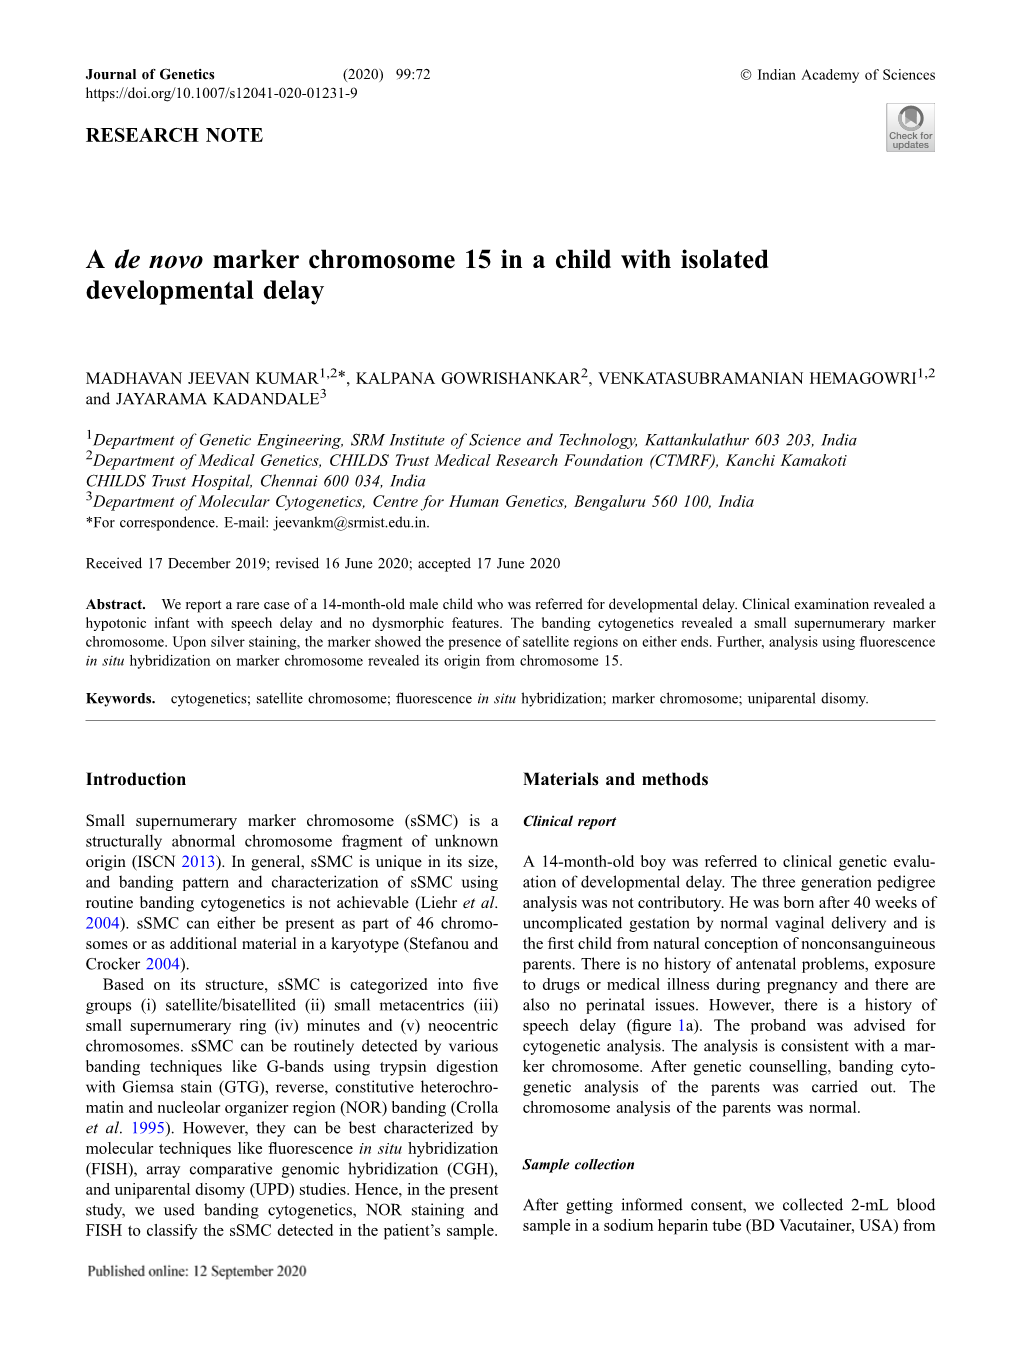 A De Novo Marker Chromosome 15 in a Child with Isolated Developmental Delay